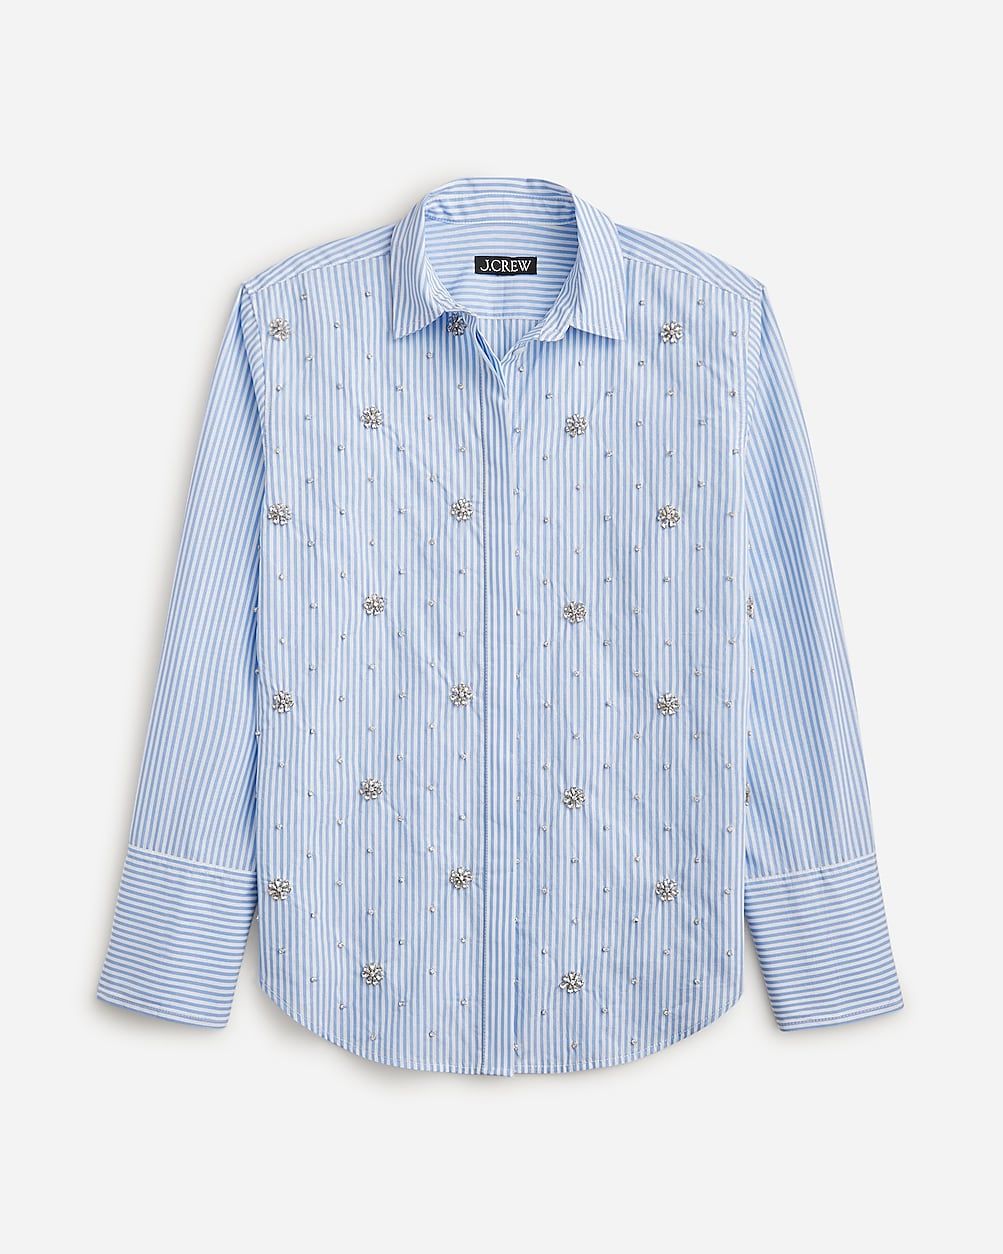 Collection garçon embellished shirt in blue pinstripe | J.Crew US